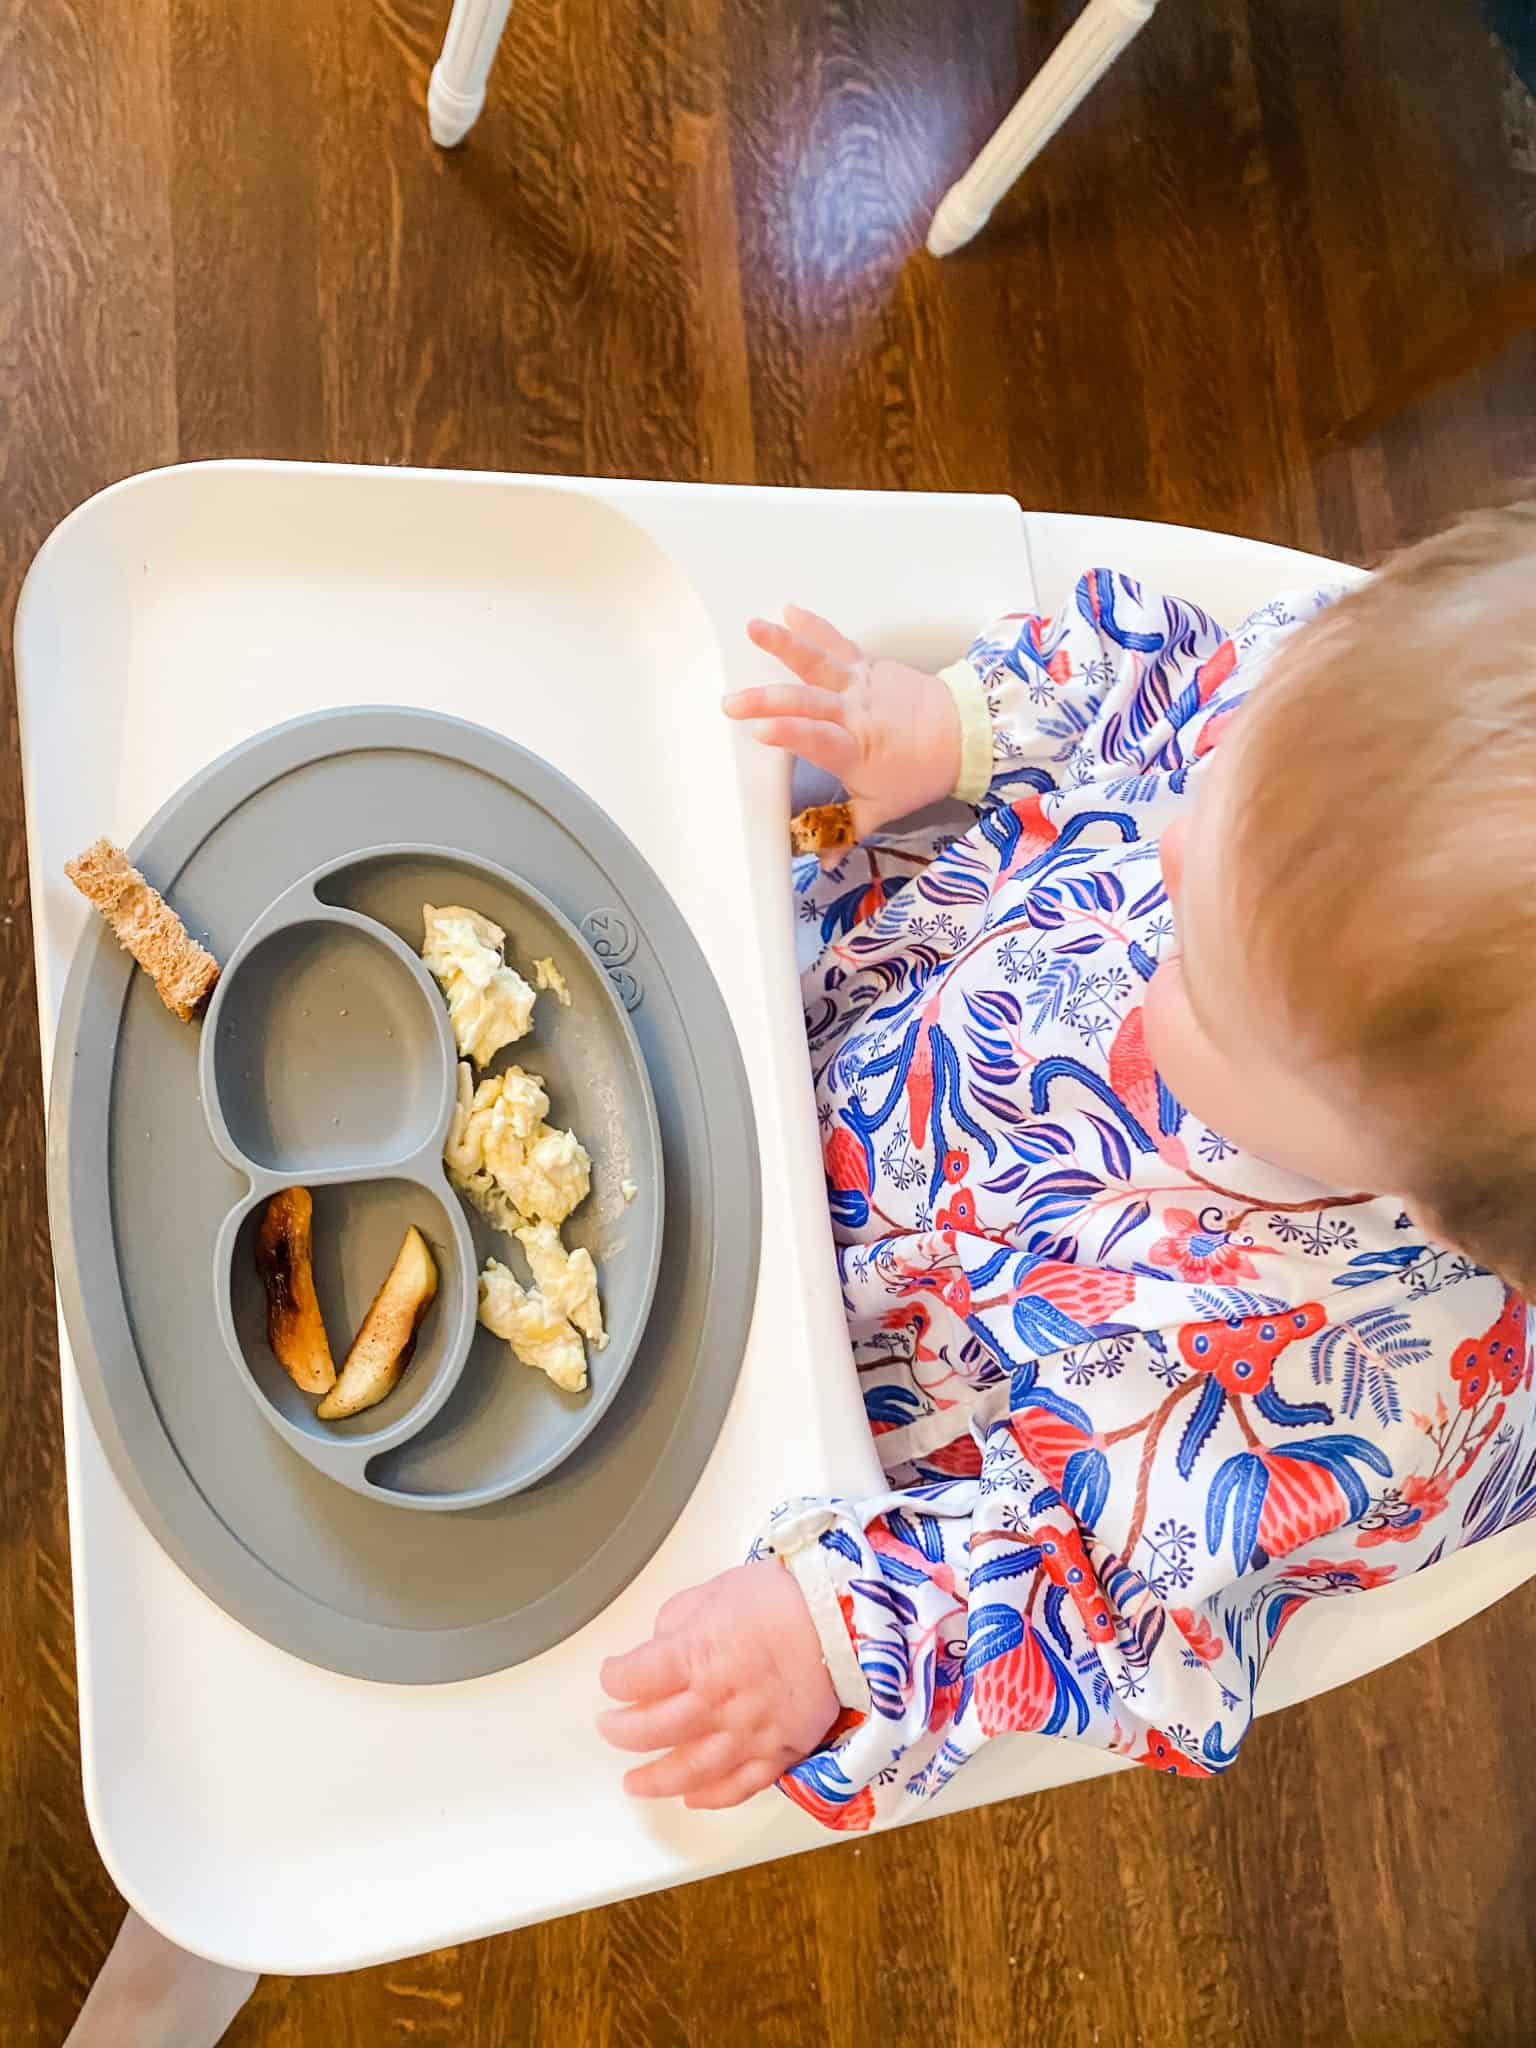 Baby Led Weaning Q&A and Feeding Essentials - Tara Rochford Nutrition #babyledweaning